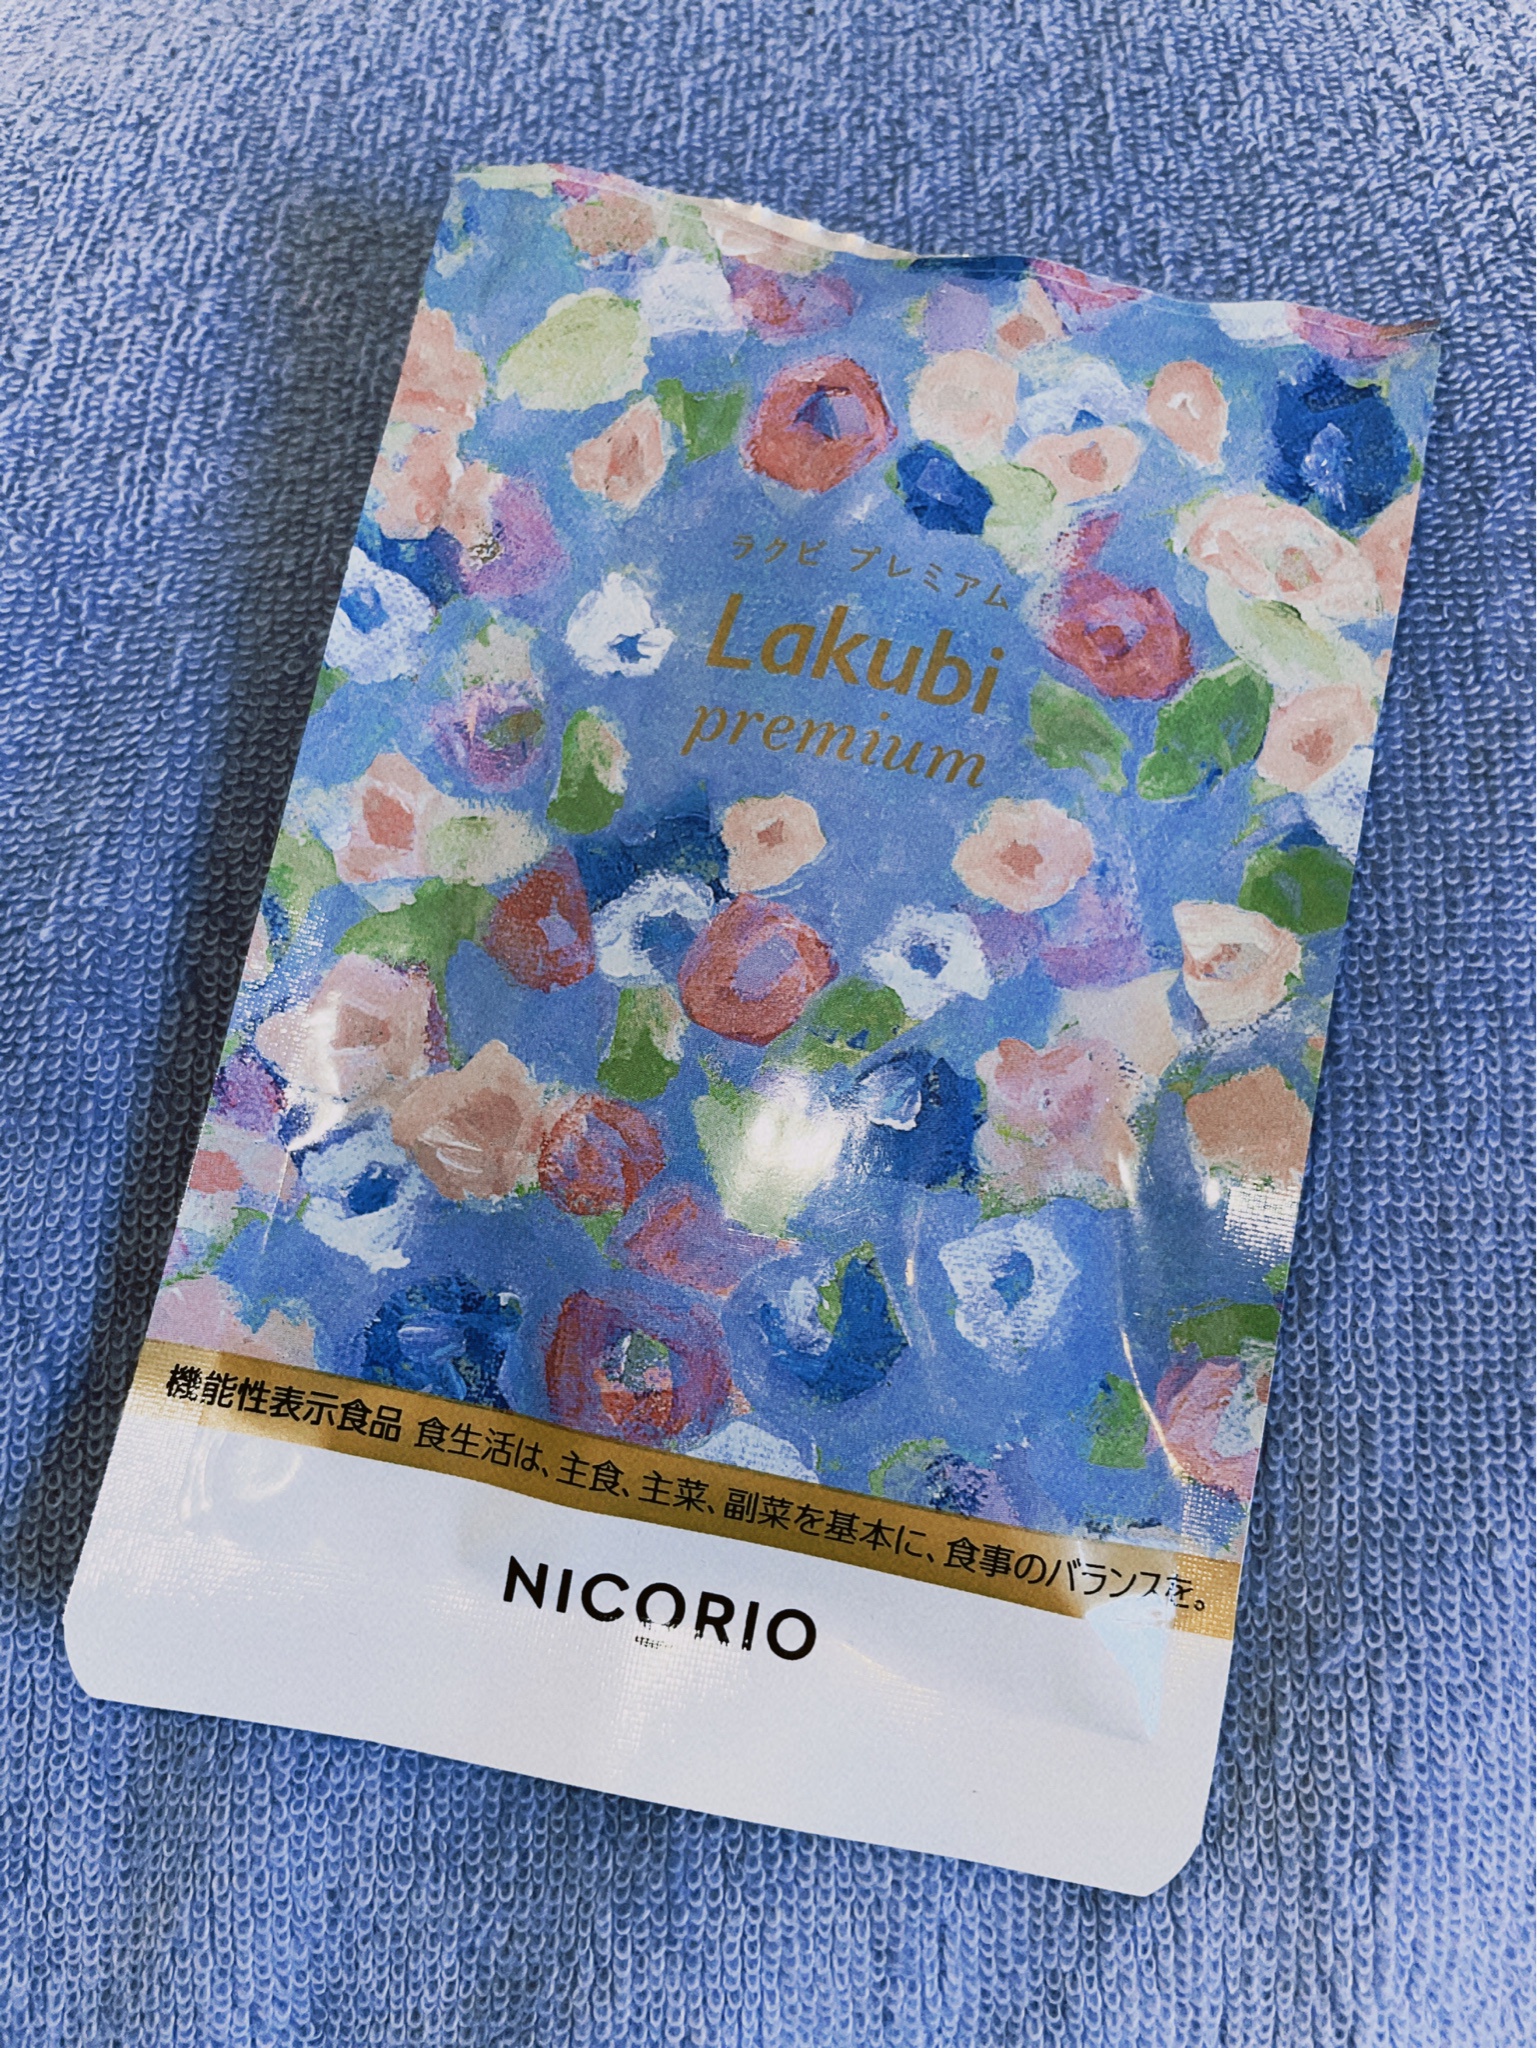 NICORIOニコリオ / Lakubi premiumラクビプレミアムの公式商品